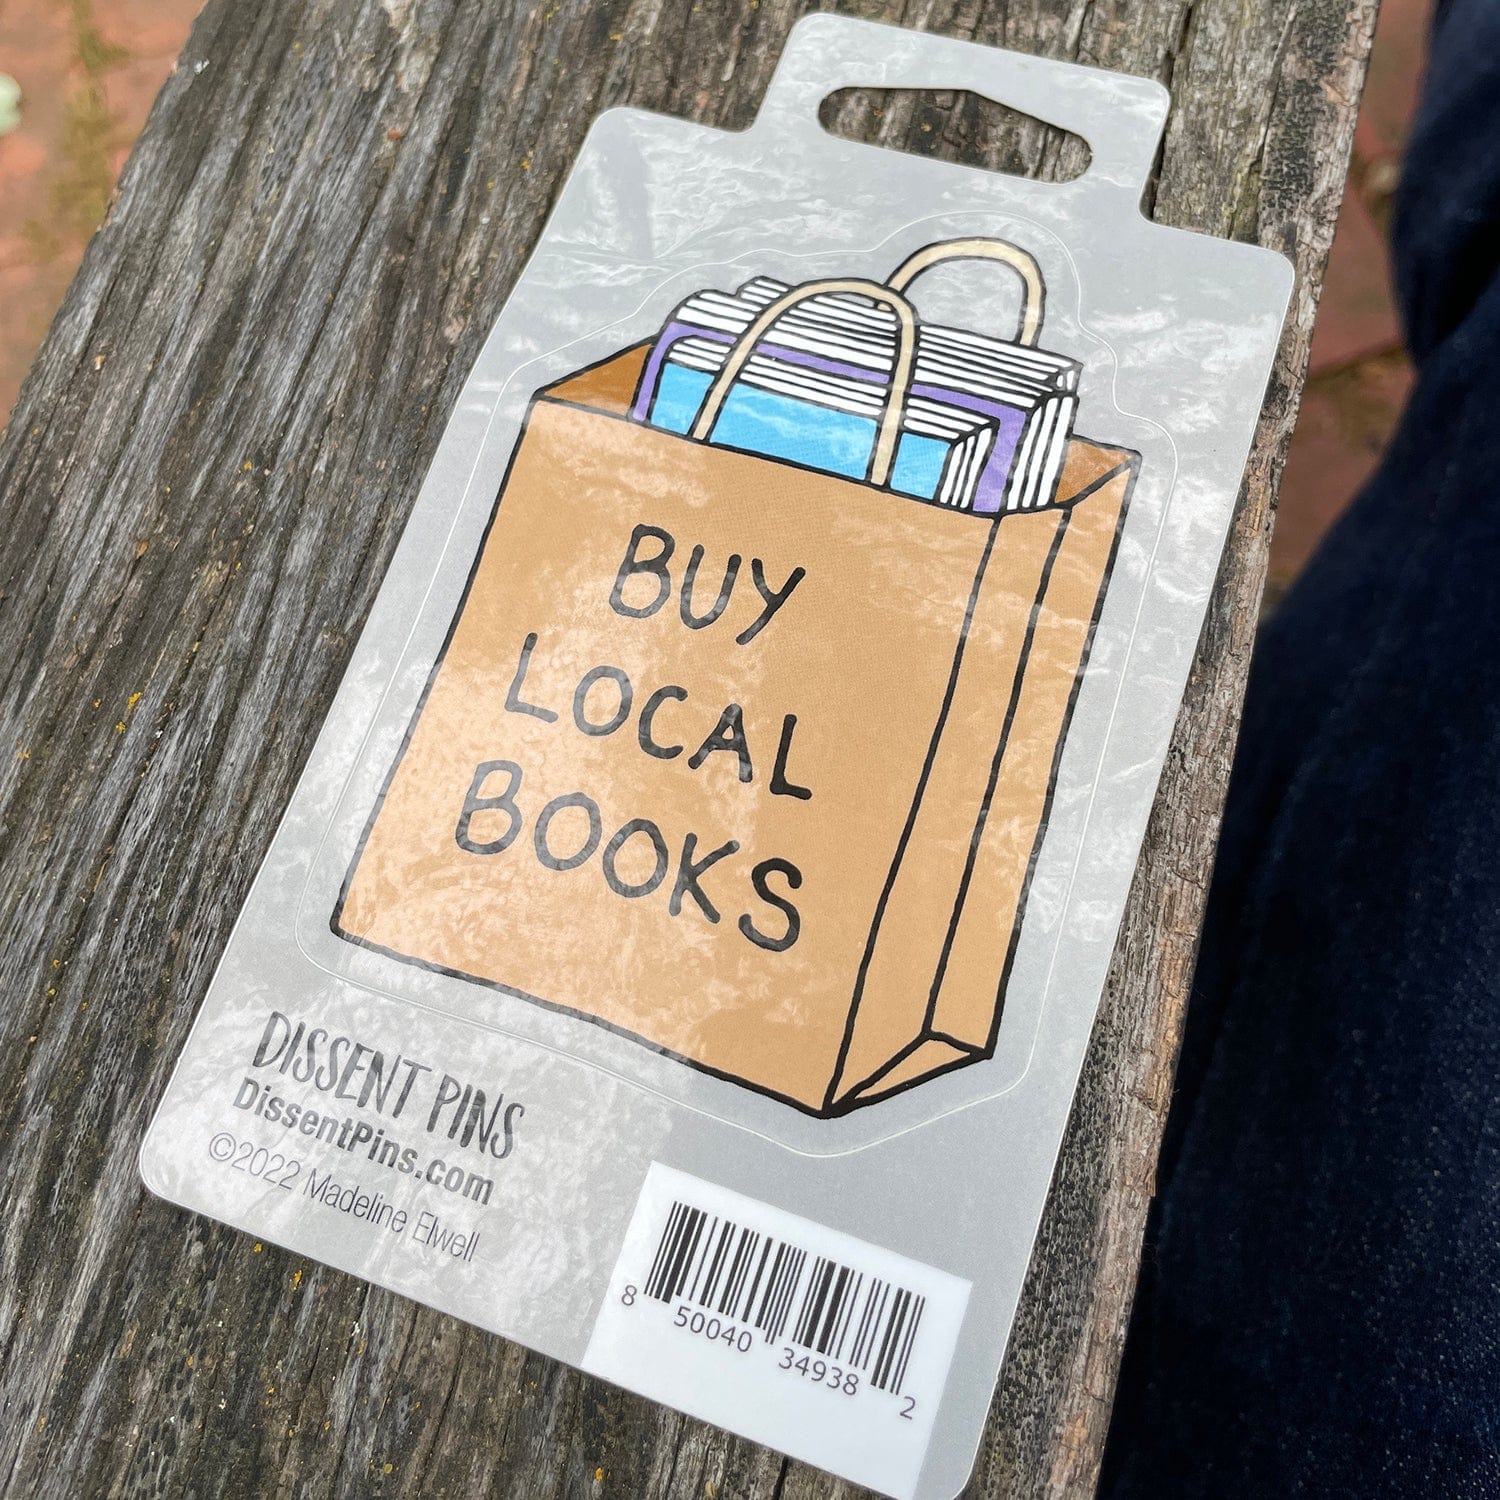 Buy Local Books - Sticker